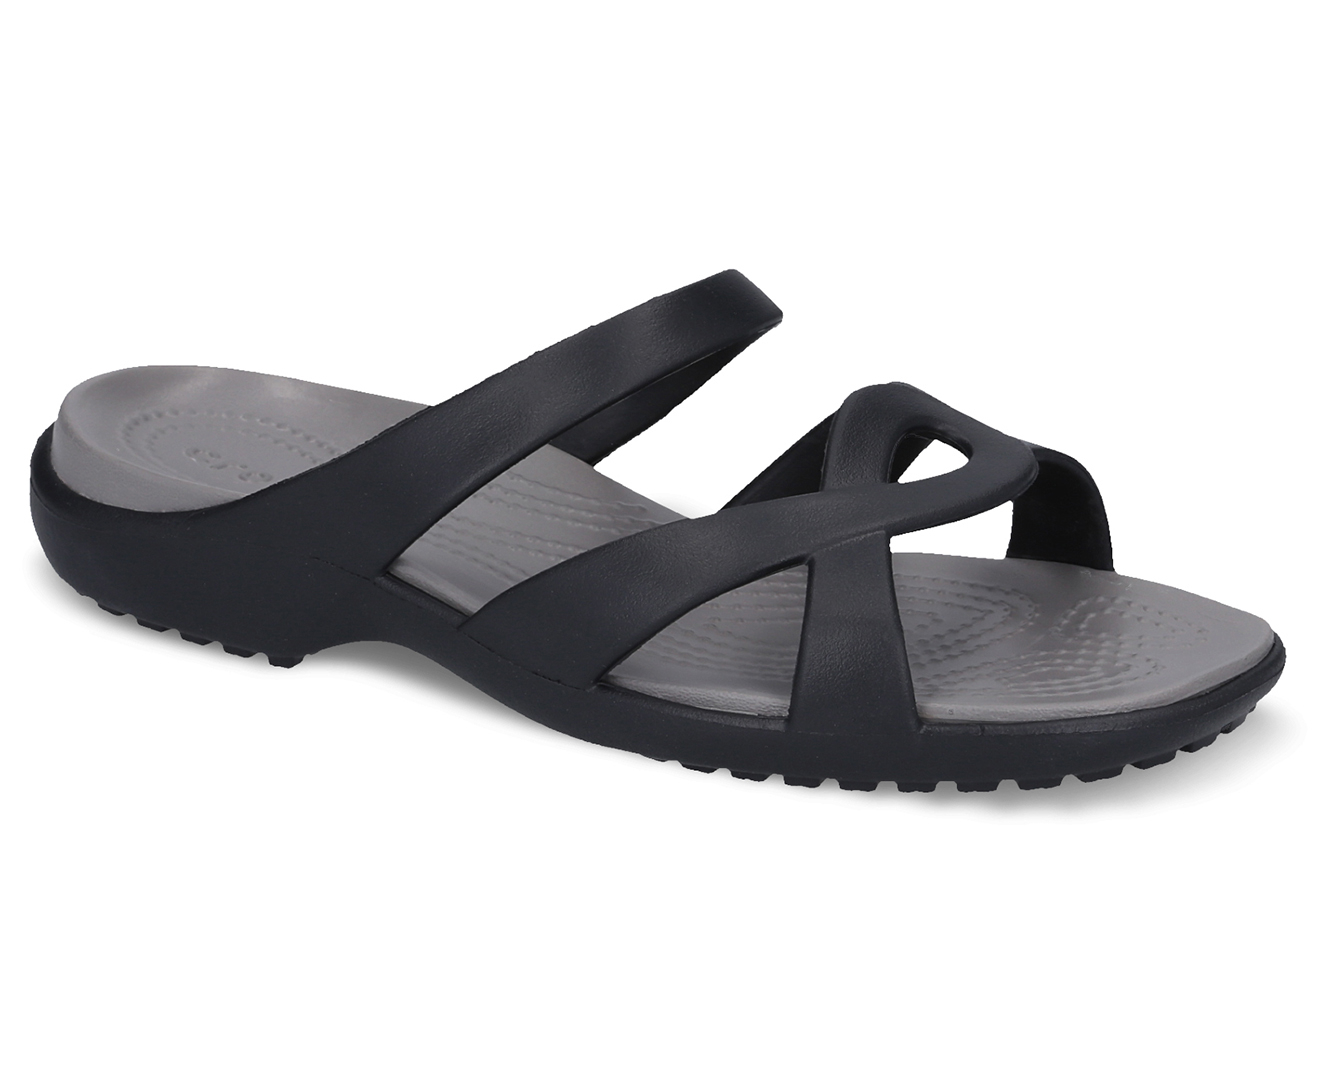 Crocs Women's Meleen Twist Sandals - Black Smoke | Catch.com.au